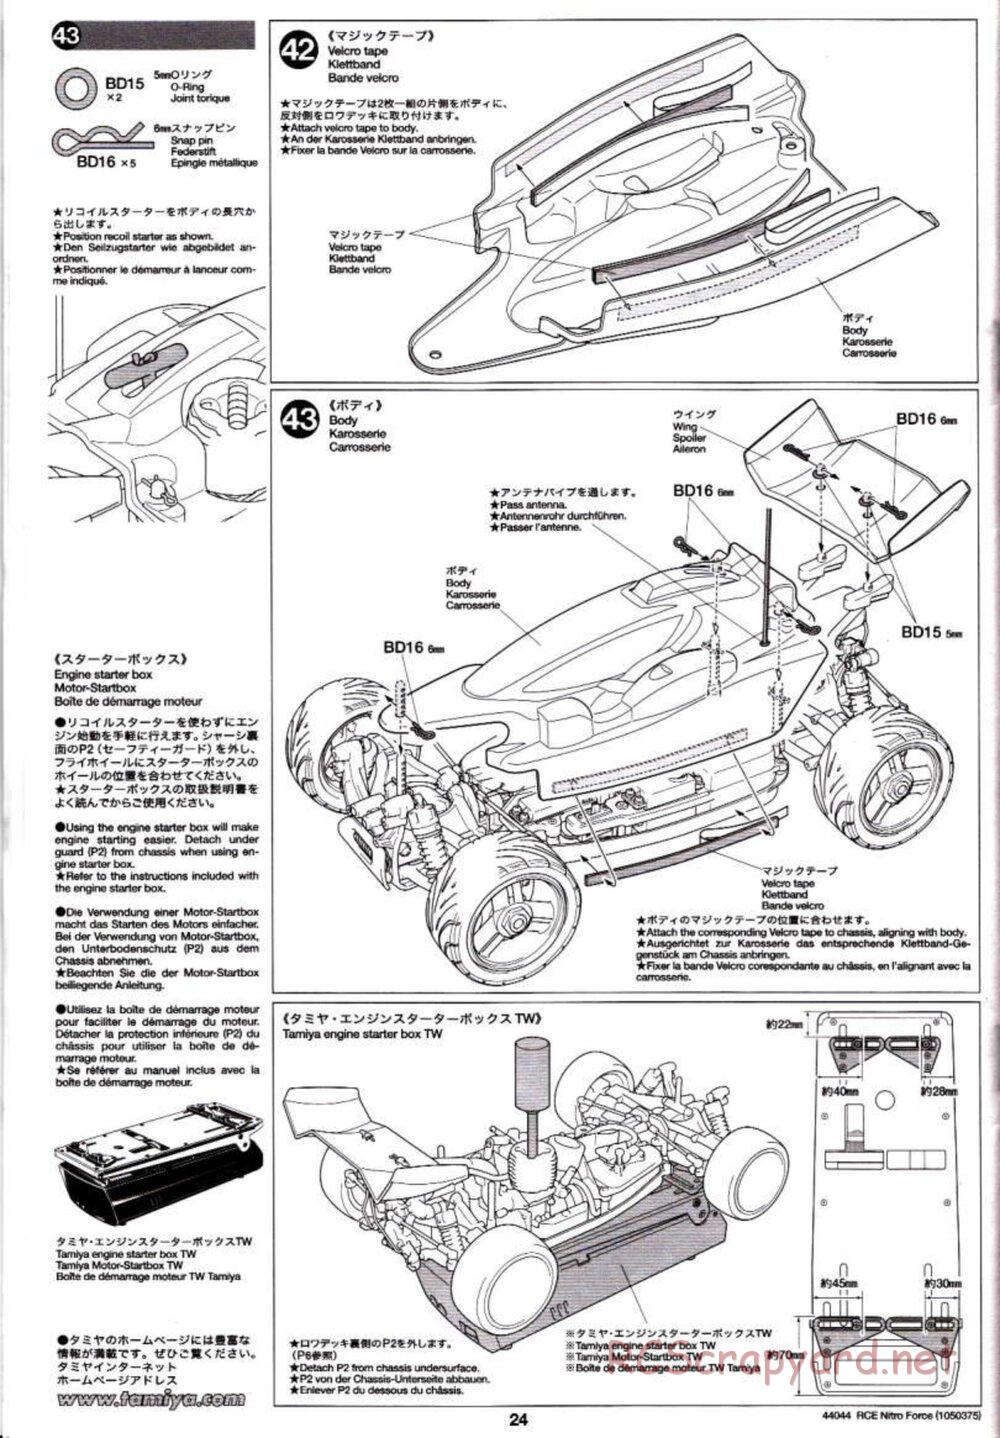 Tamiya - Nitro Force - NDF-01 Chassis - Manual - Page 24